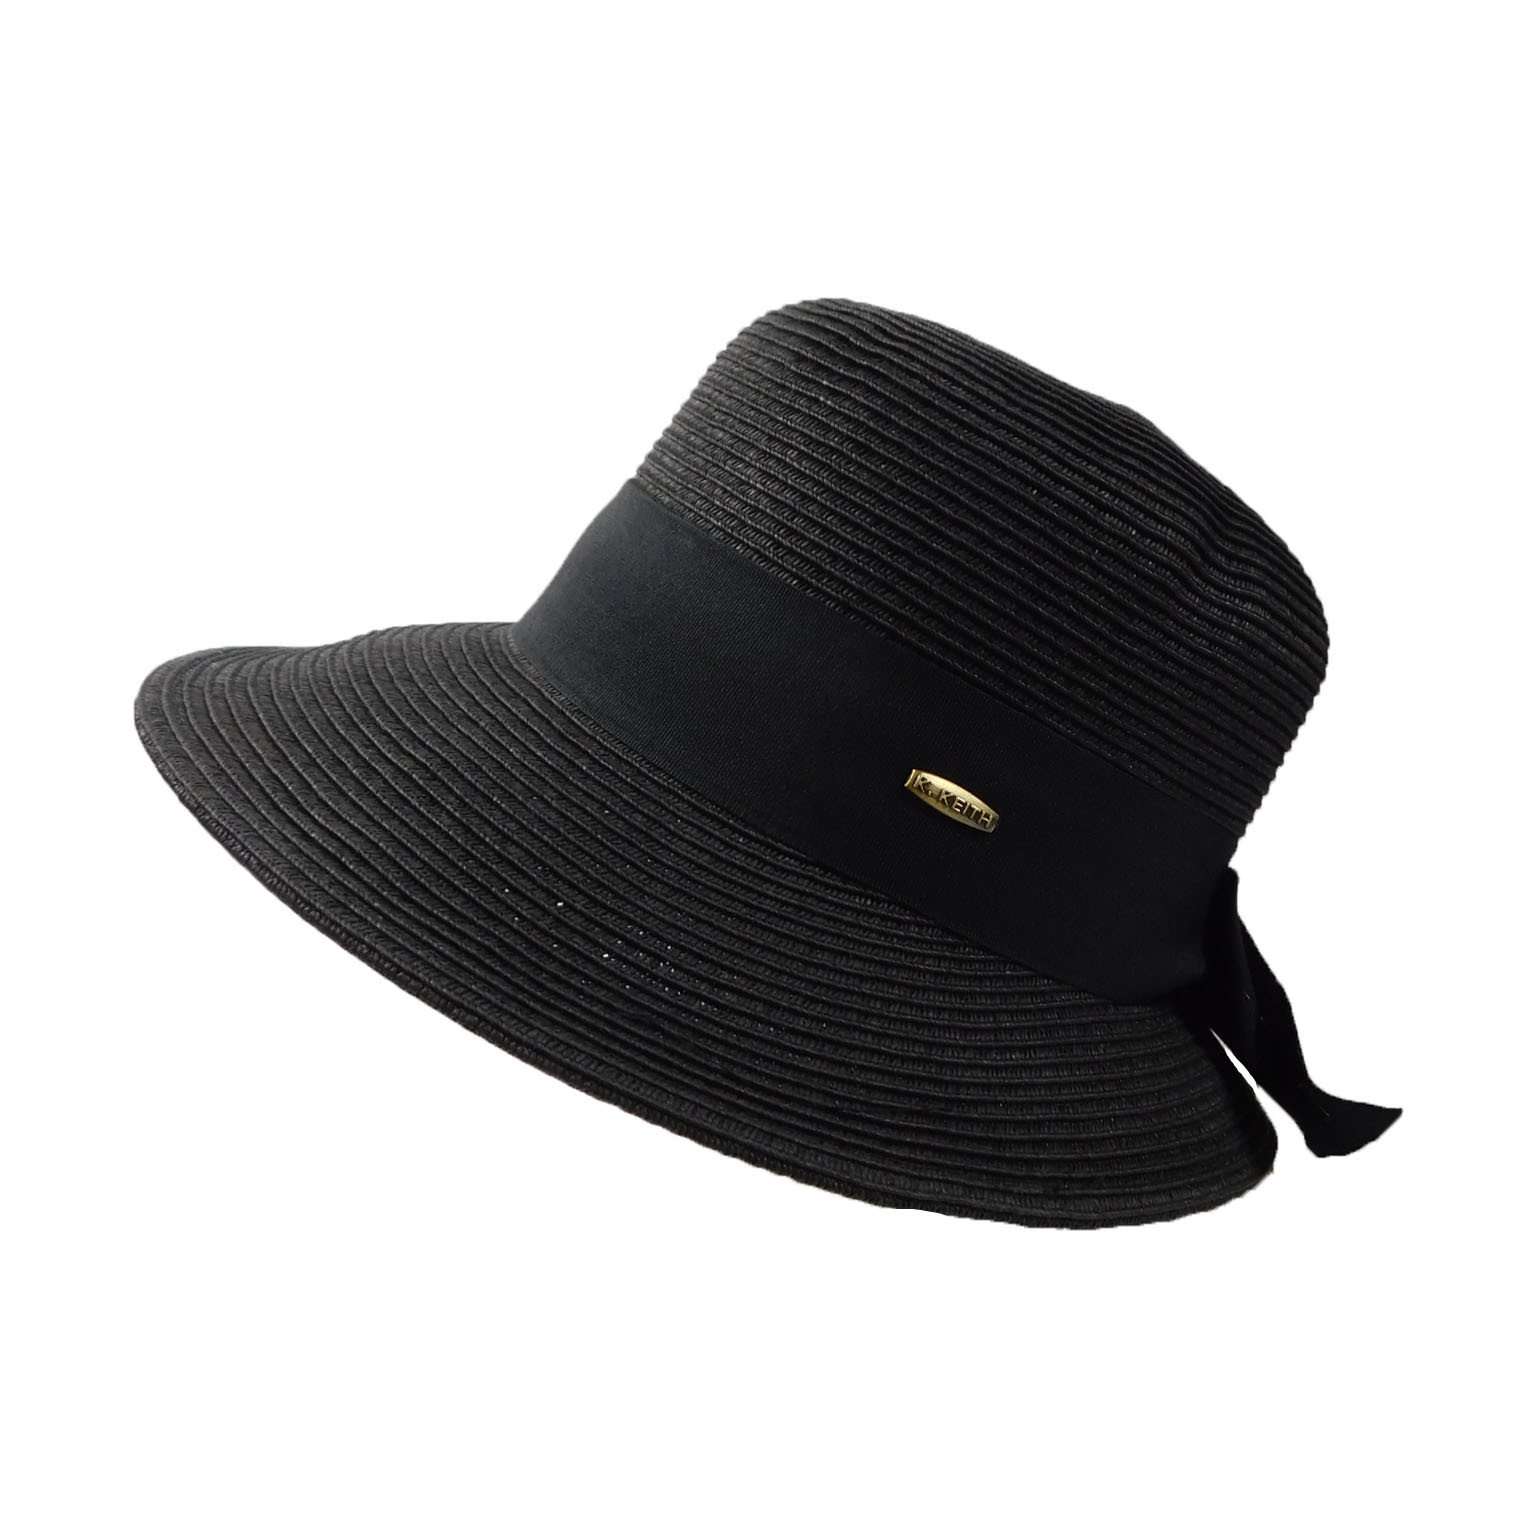 Sun Hat with Narrowing Brim - Karen Keith Wide Brim Hat Great hats by Karen Keith BT23Abk Black Medium (57 cm) 